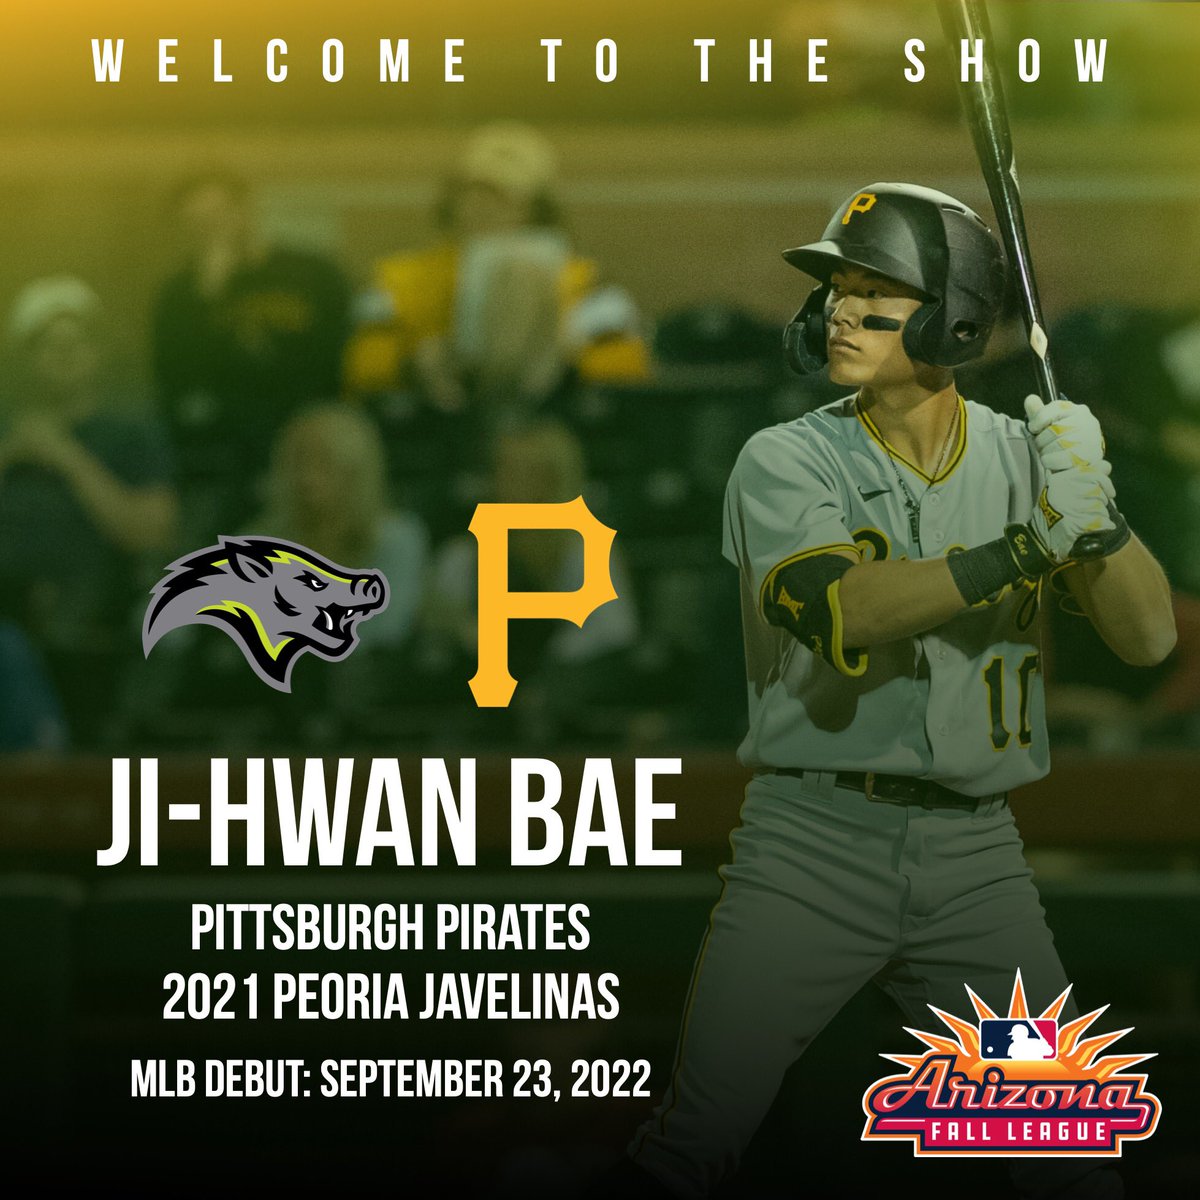 MLB's Arizona Fall League on X: Welcome to the Show, @Bae_ji_hwan